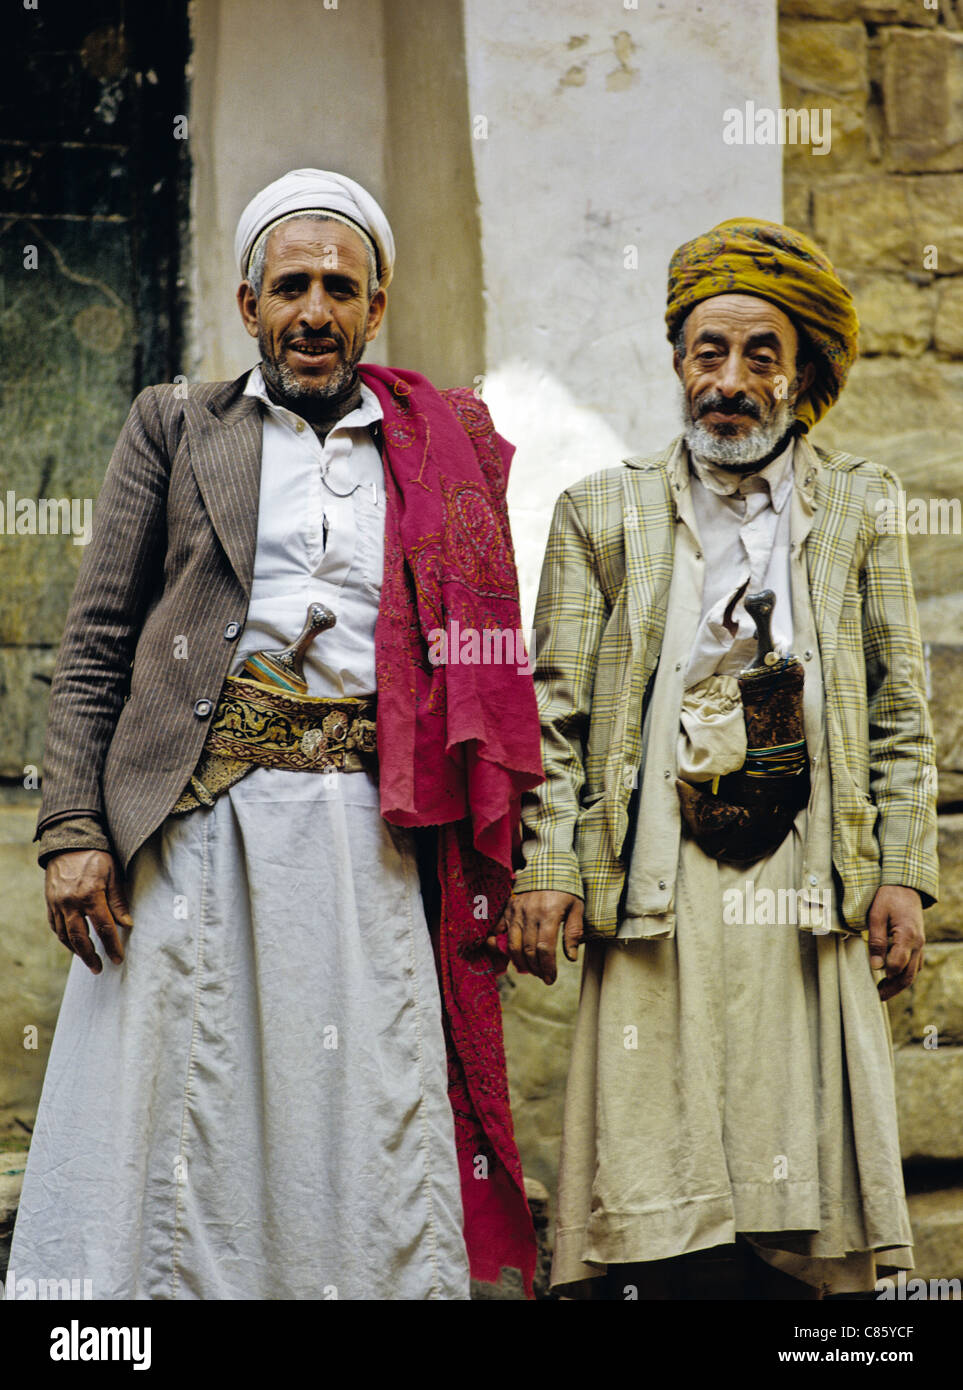 Portrait of two Yemeni men wearing traditional clothing and displaying their janbiyas (traditional daggers) in Thula, Yemen Stock Photo